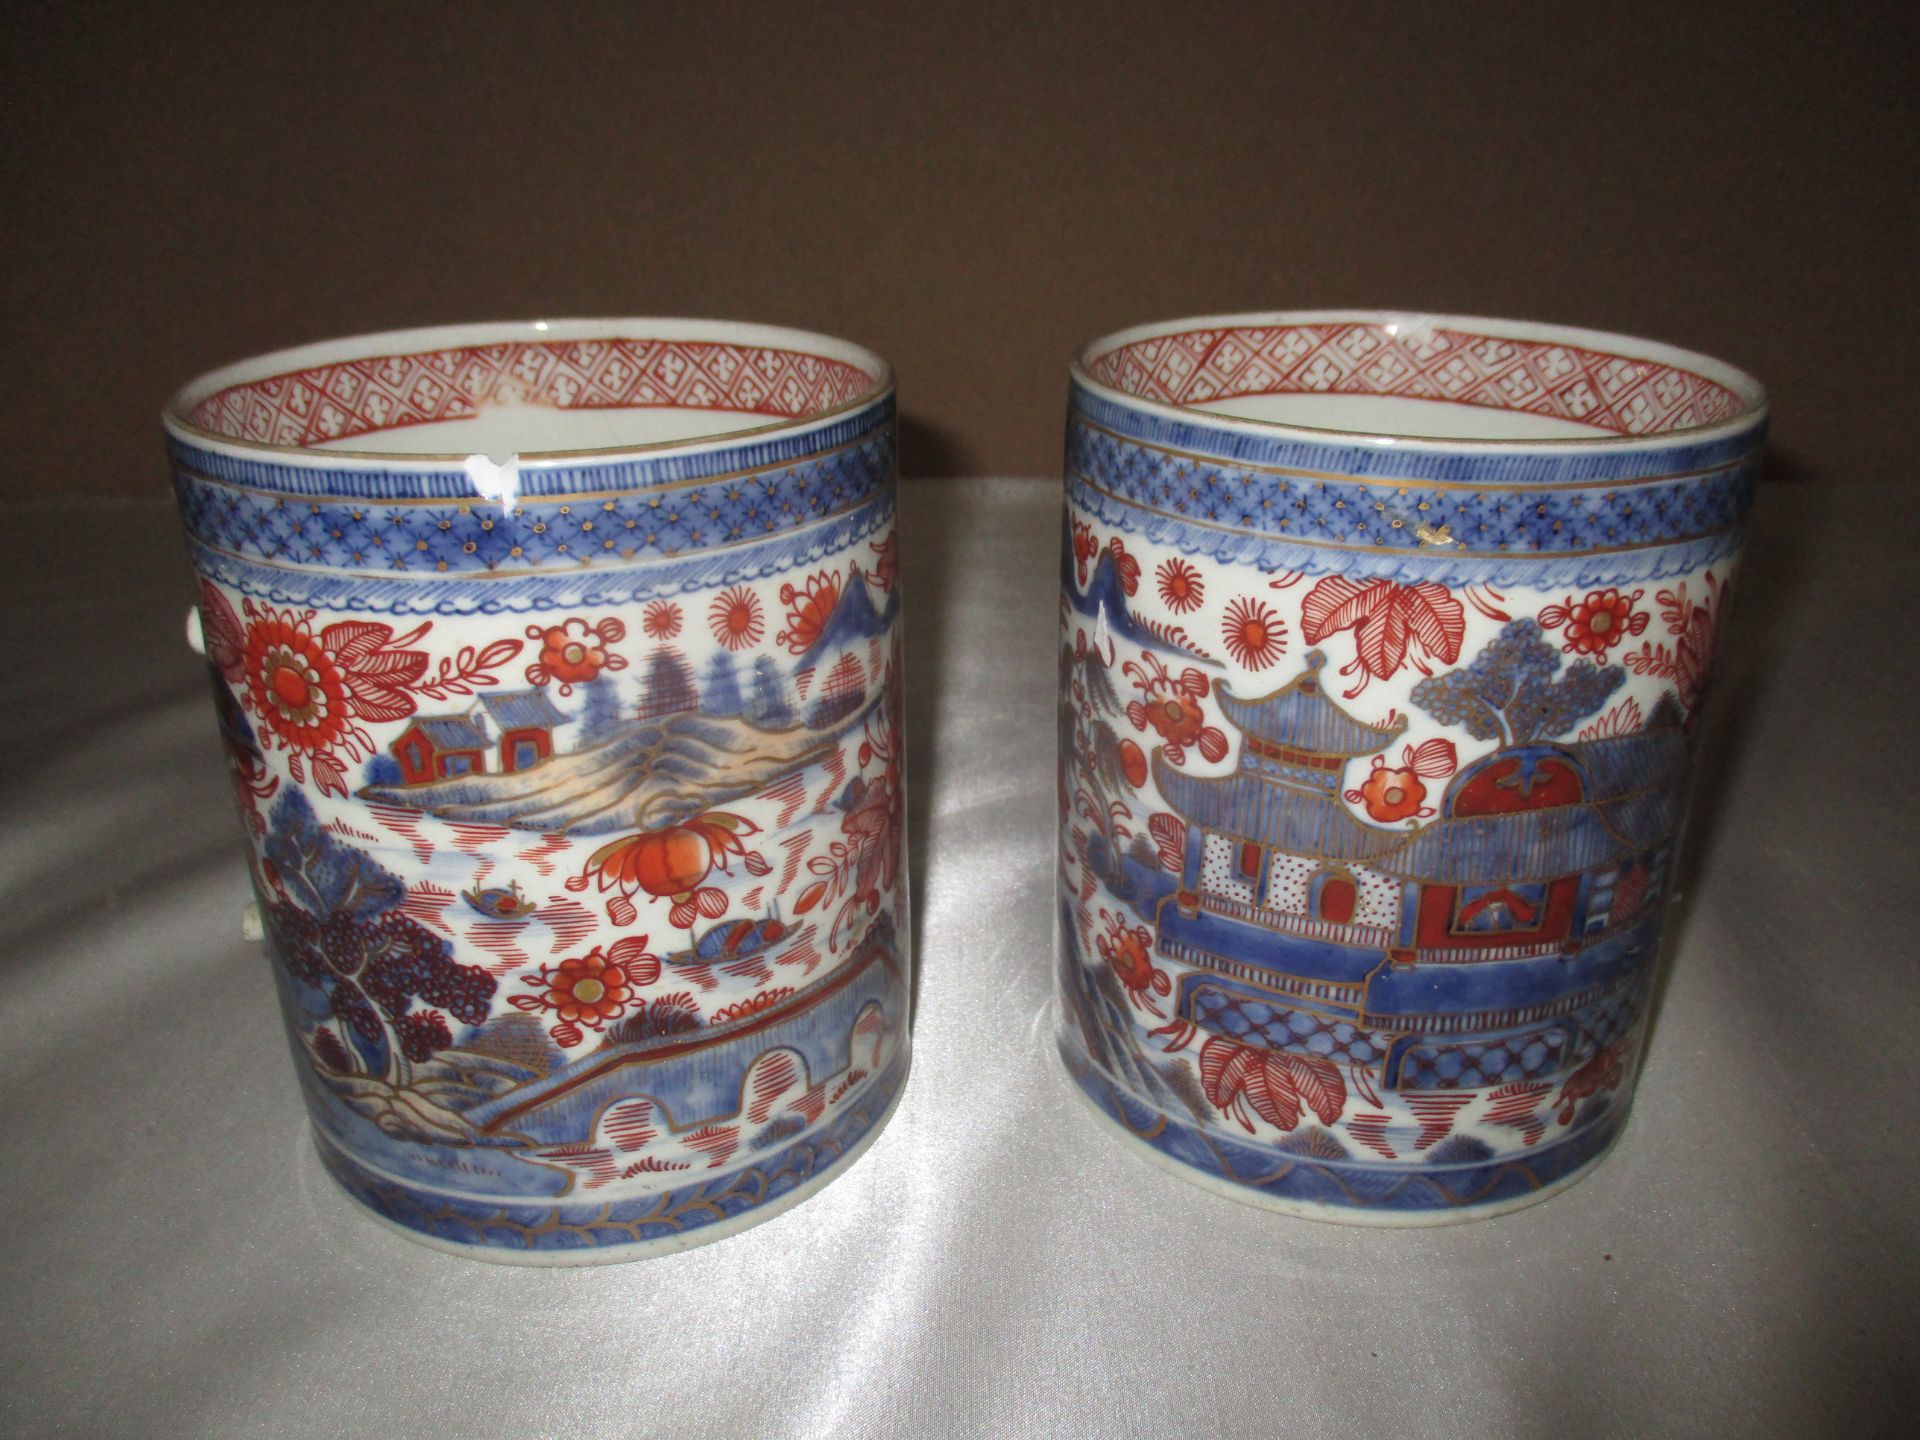 A pair of Imari patterned jugs (handles missing - as seen)